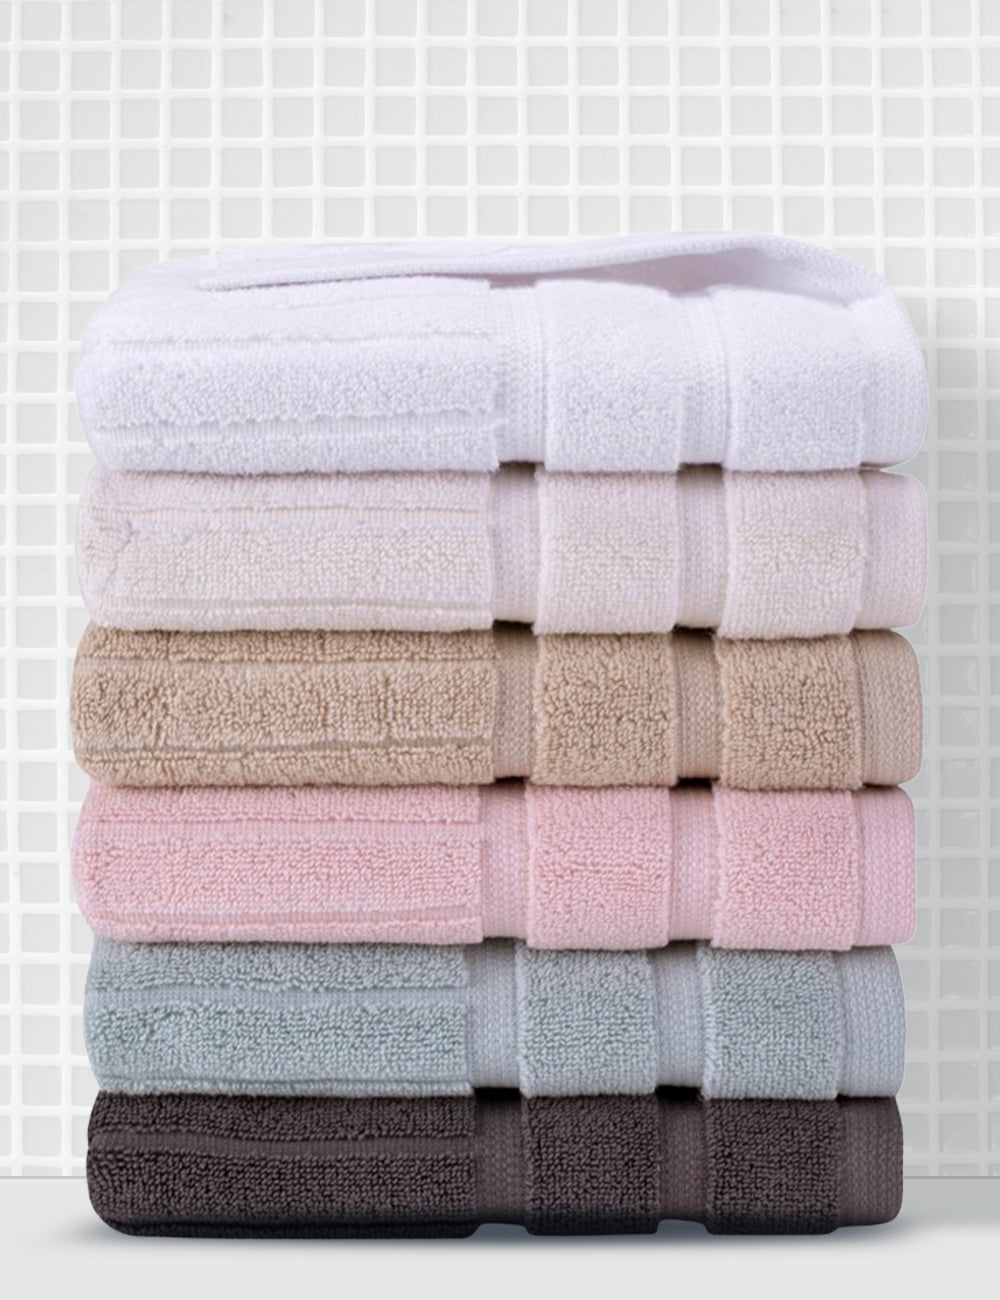 Luxury bath towel